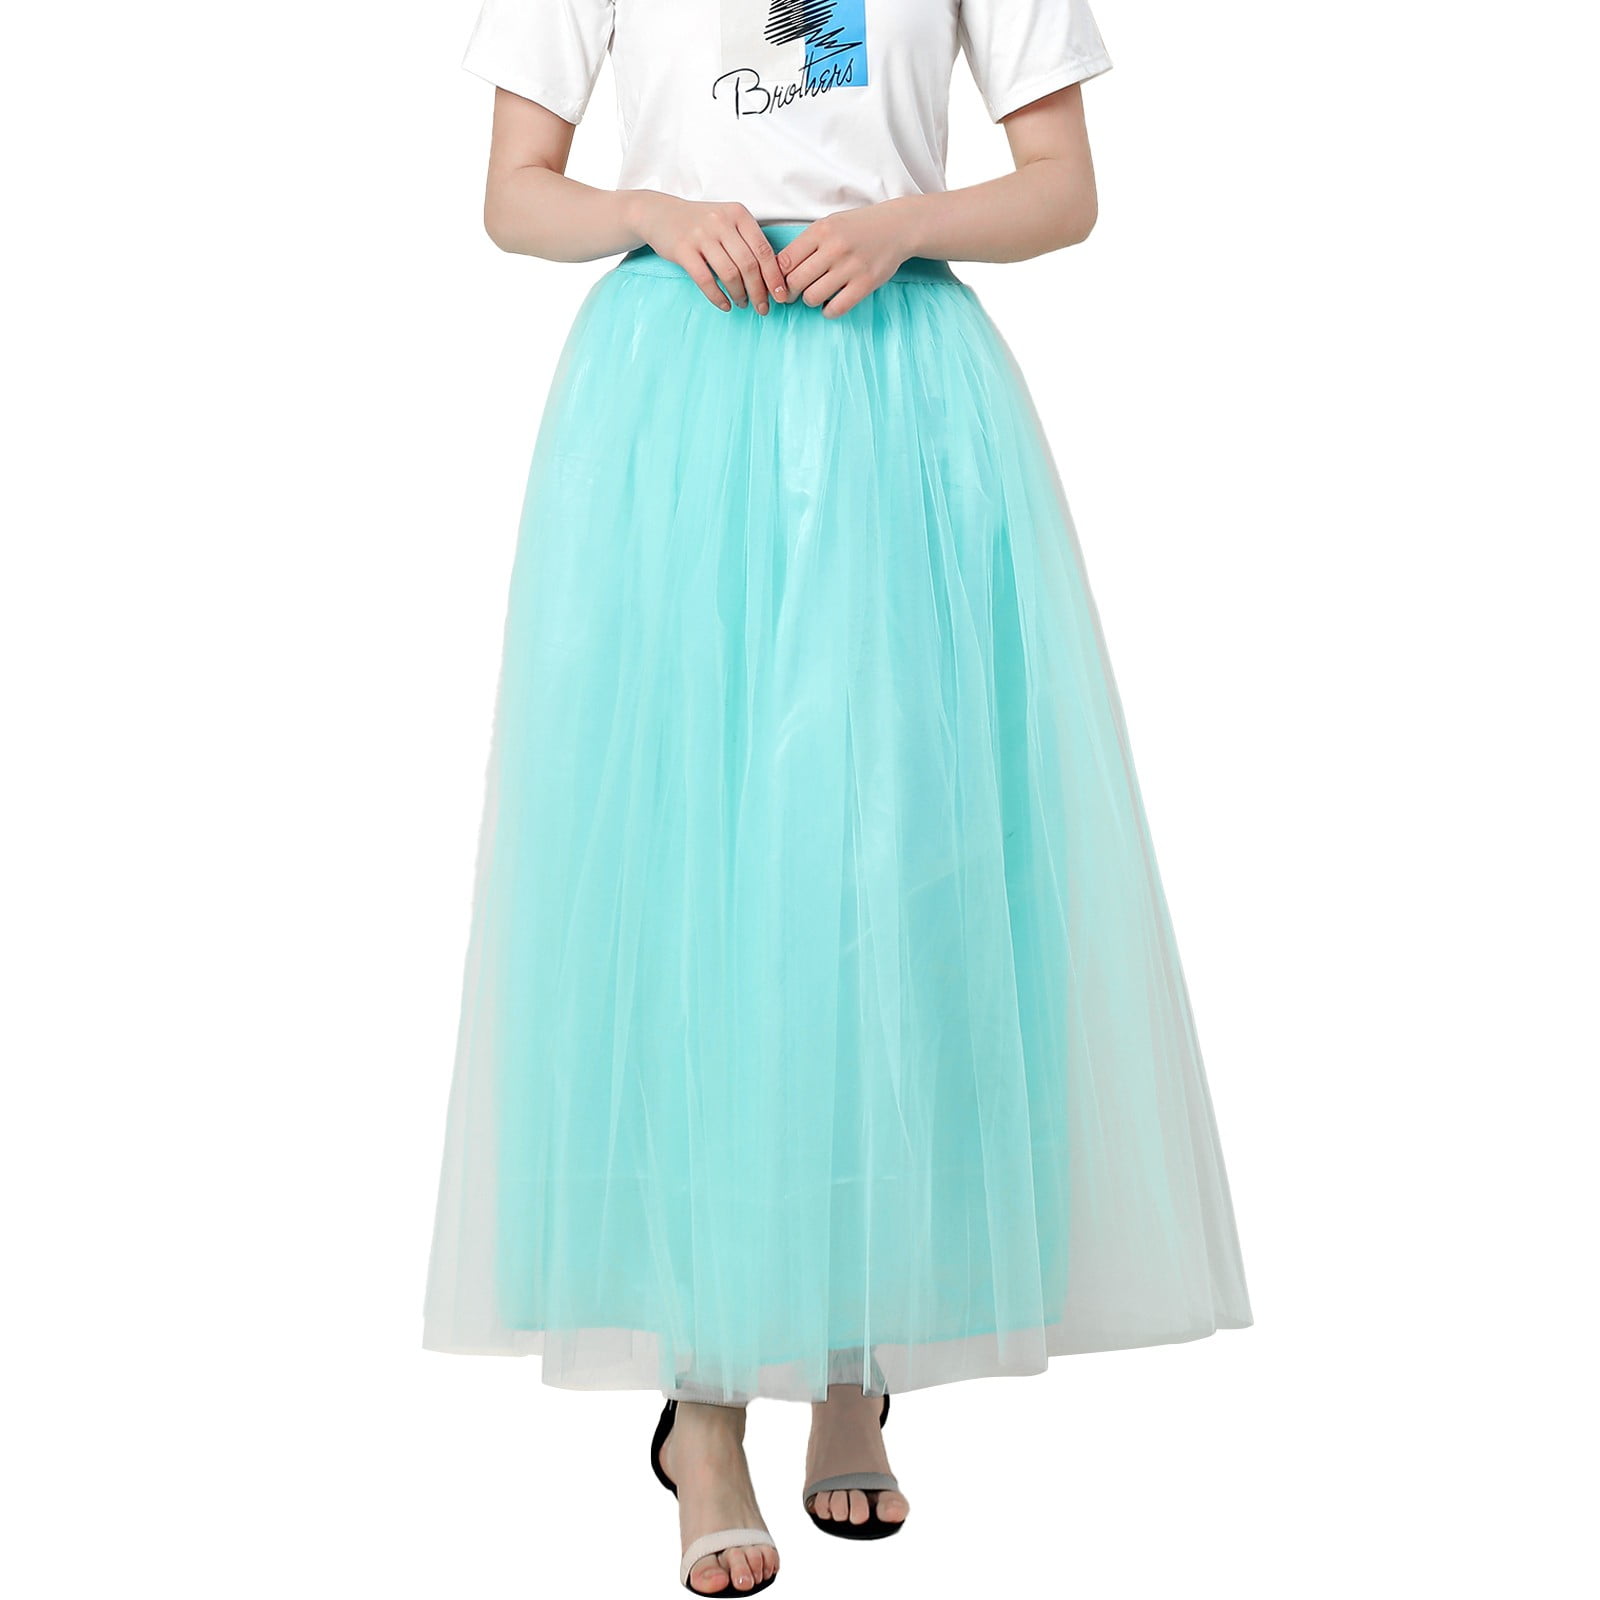 CLZOUD Casual Dresses for Summer Mint Green Women Plus Size Mesh Tulle Skirt Pleated Mesh Skirt - Walmart.com